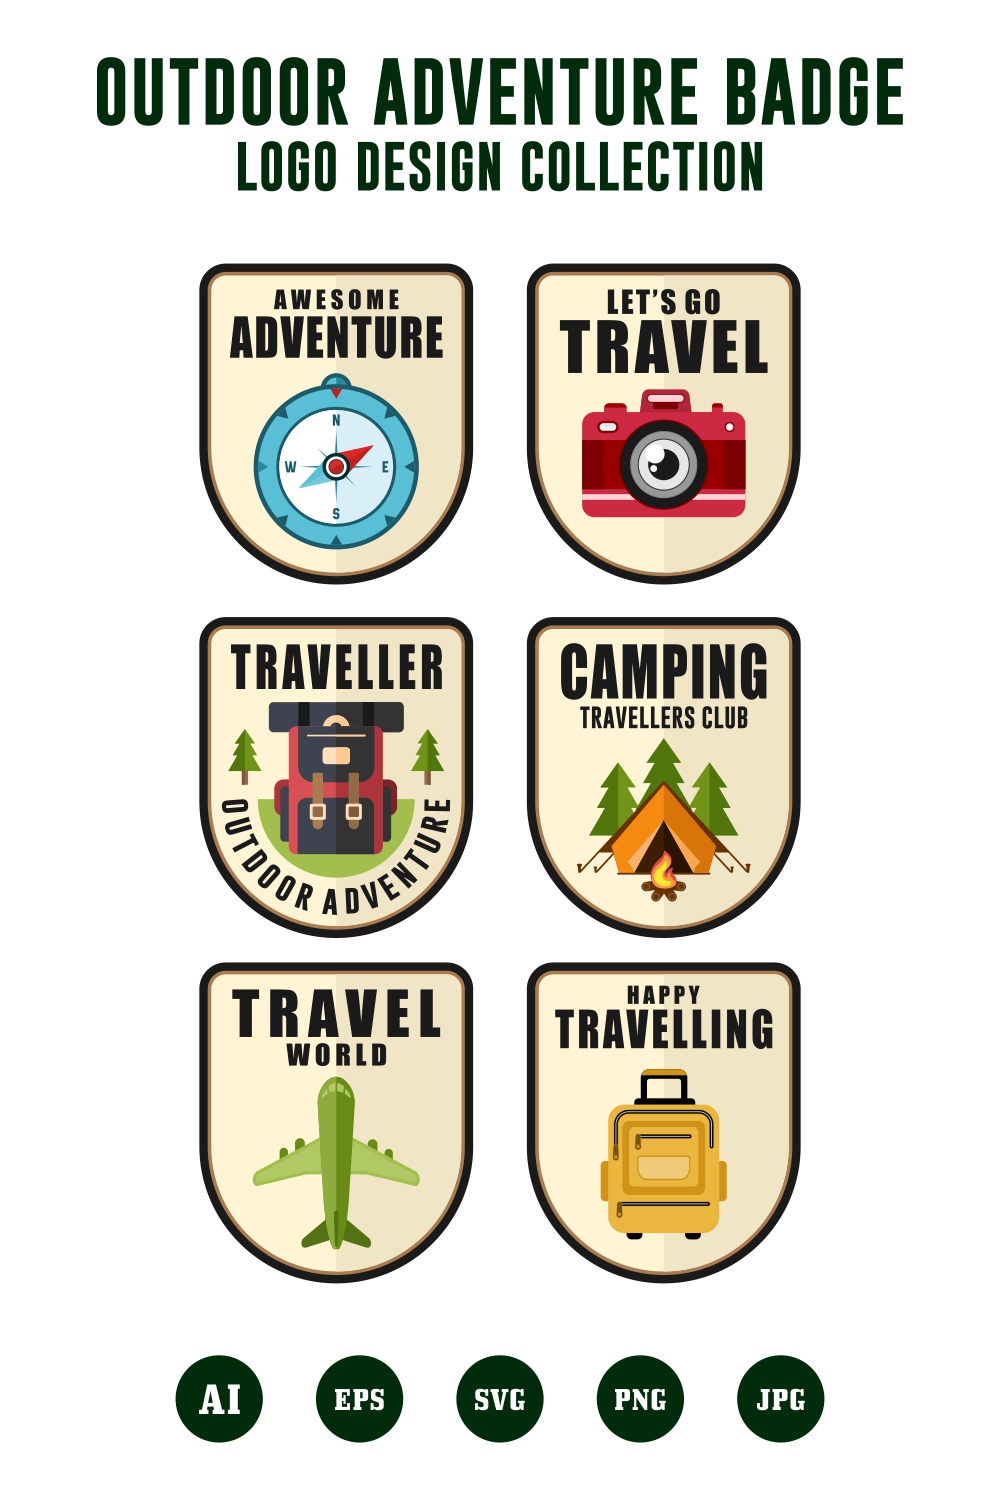 Set Outdoor adventure badge logo design collection - $5 pinterest preview image.